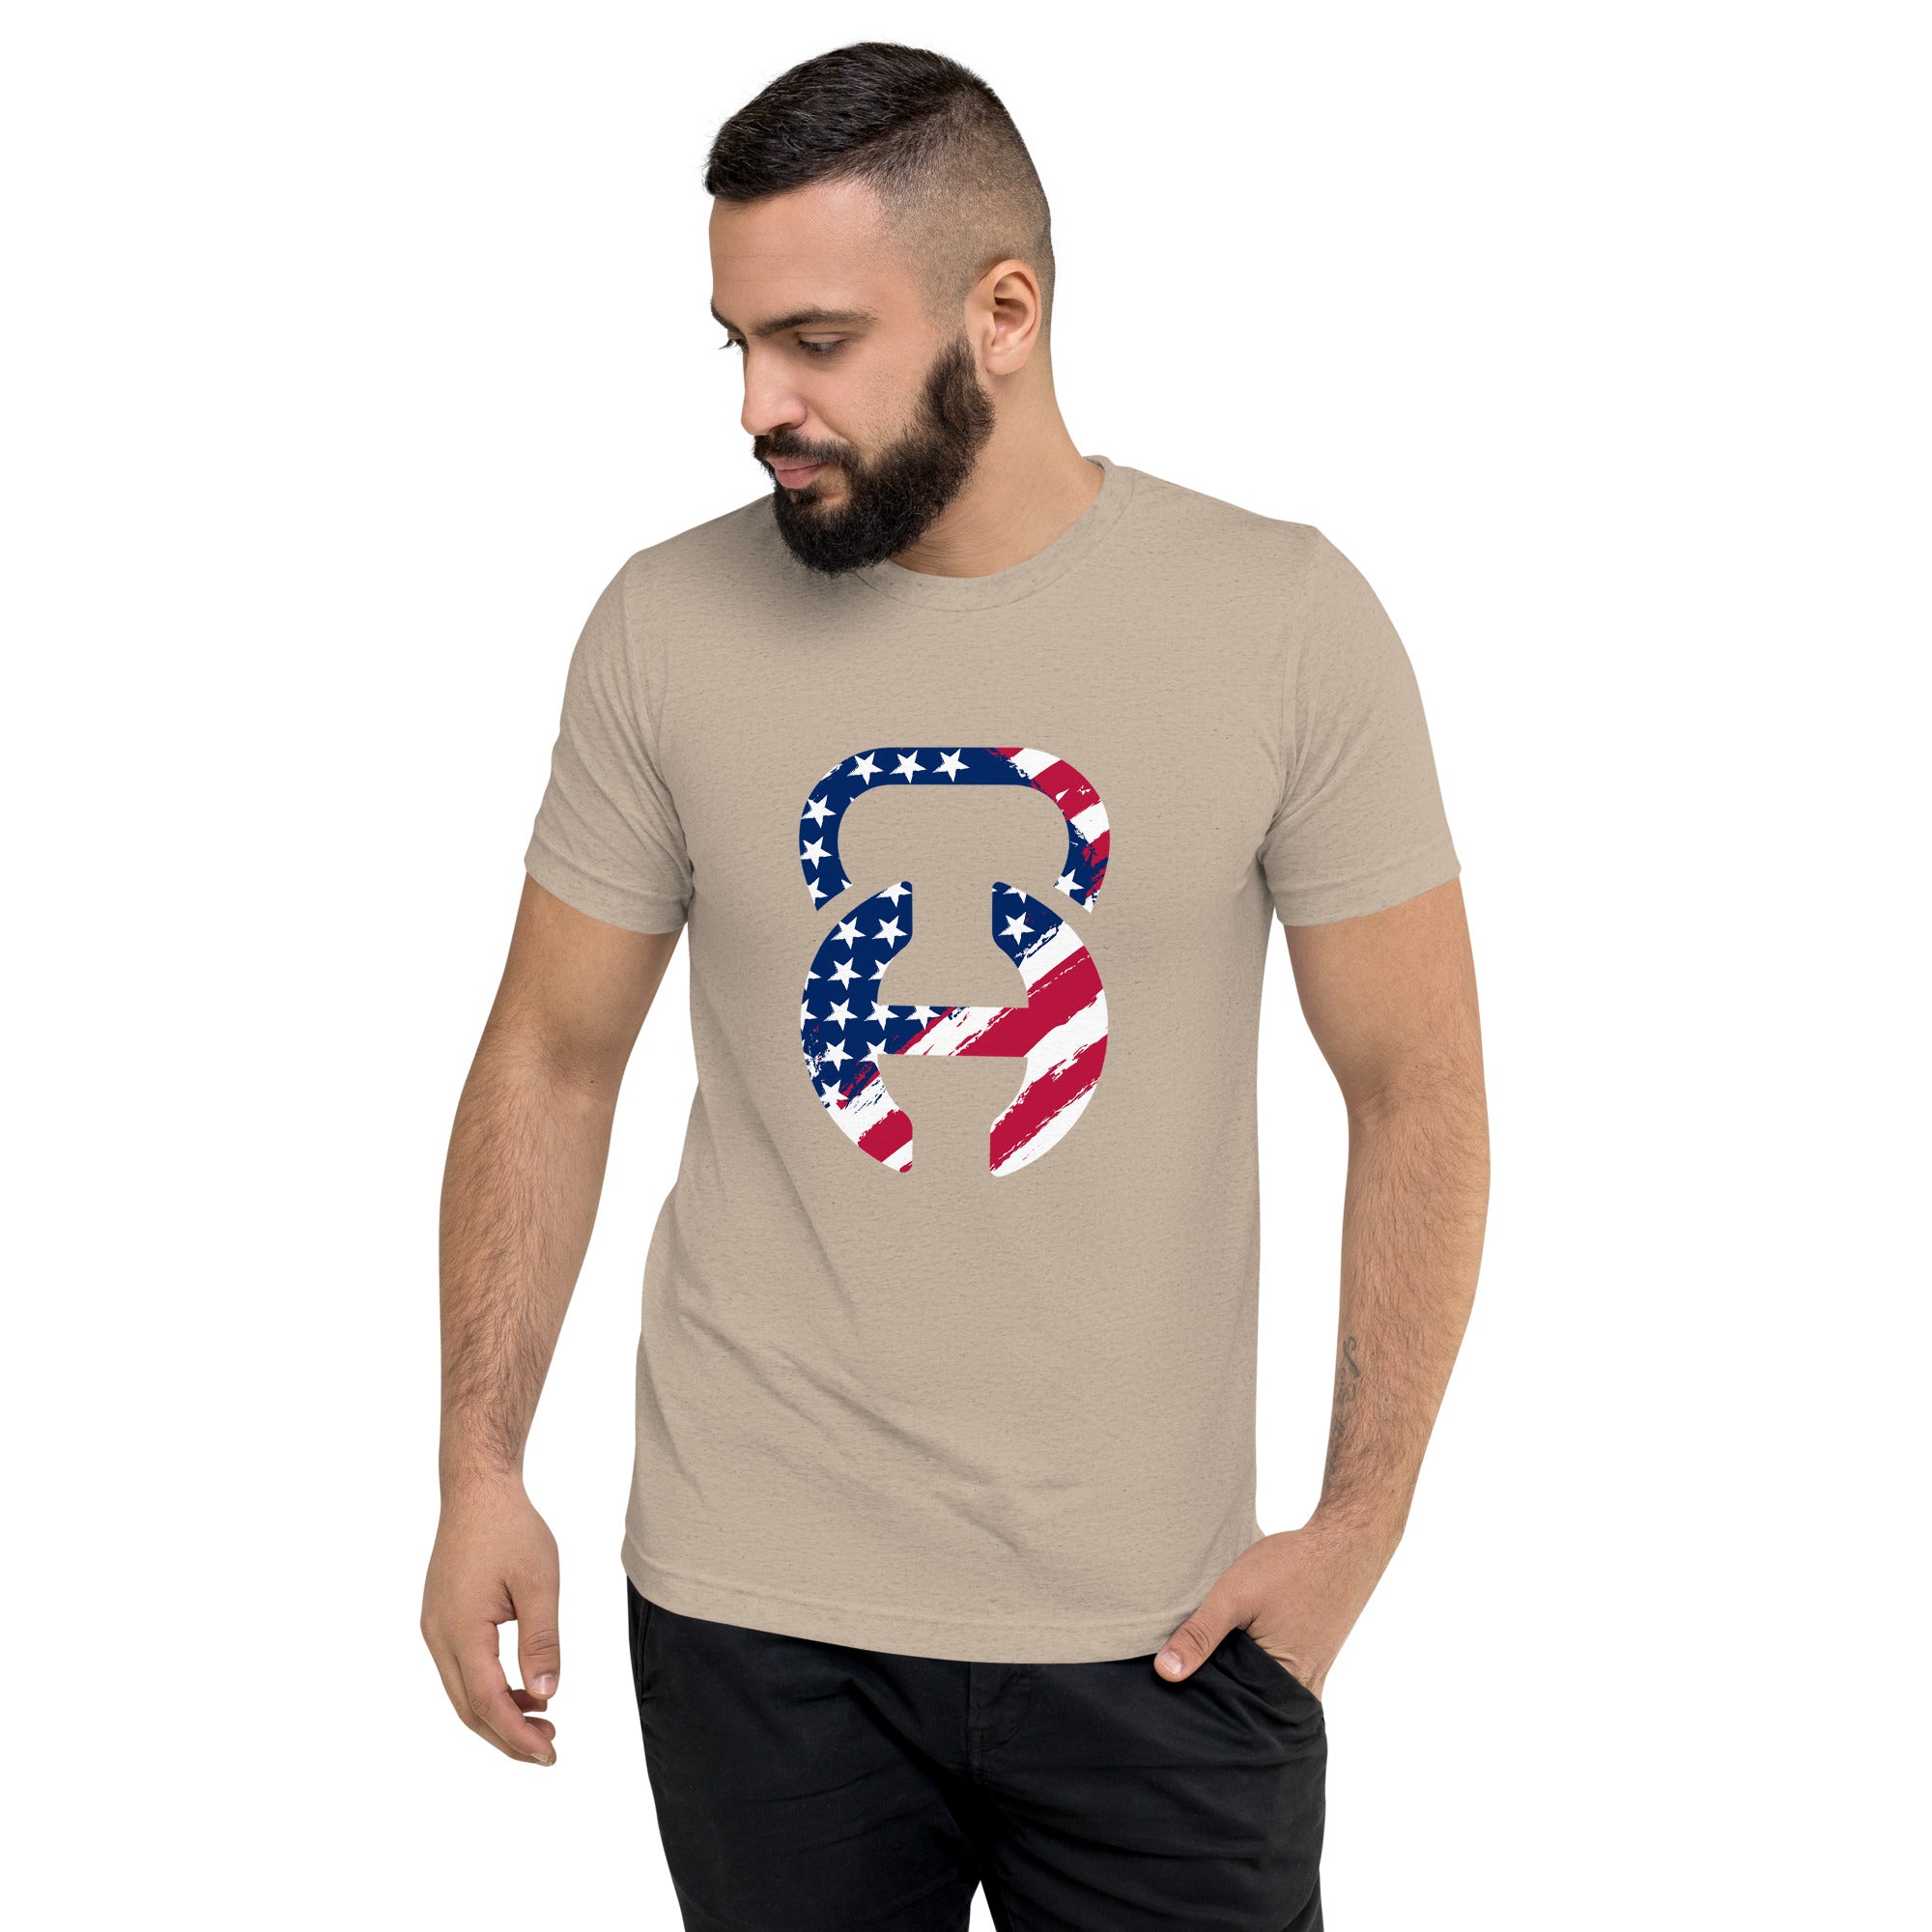 Freedom Tan Unisex Tri-Blend T-Shirt